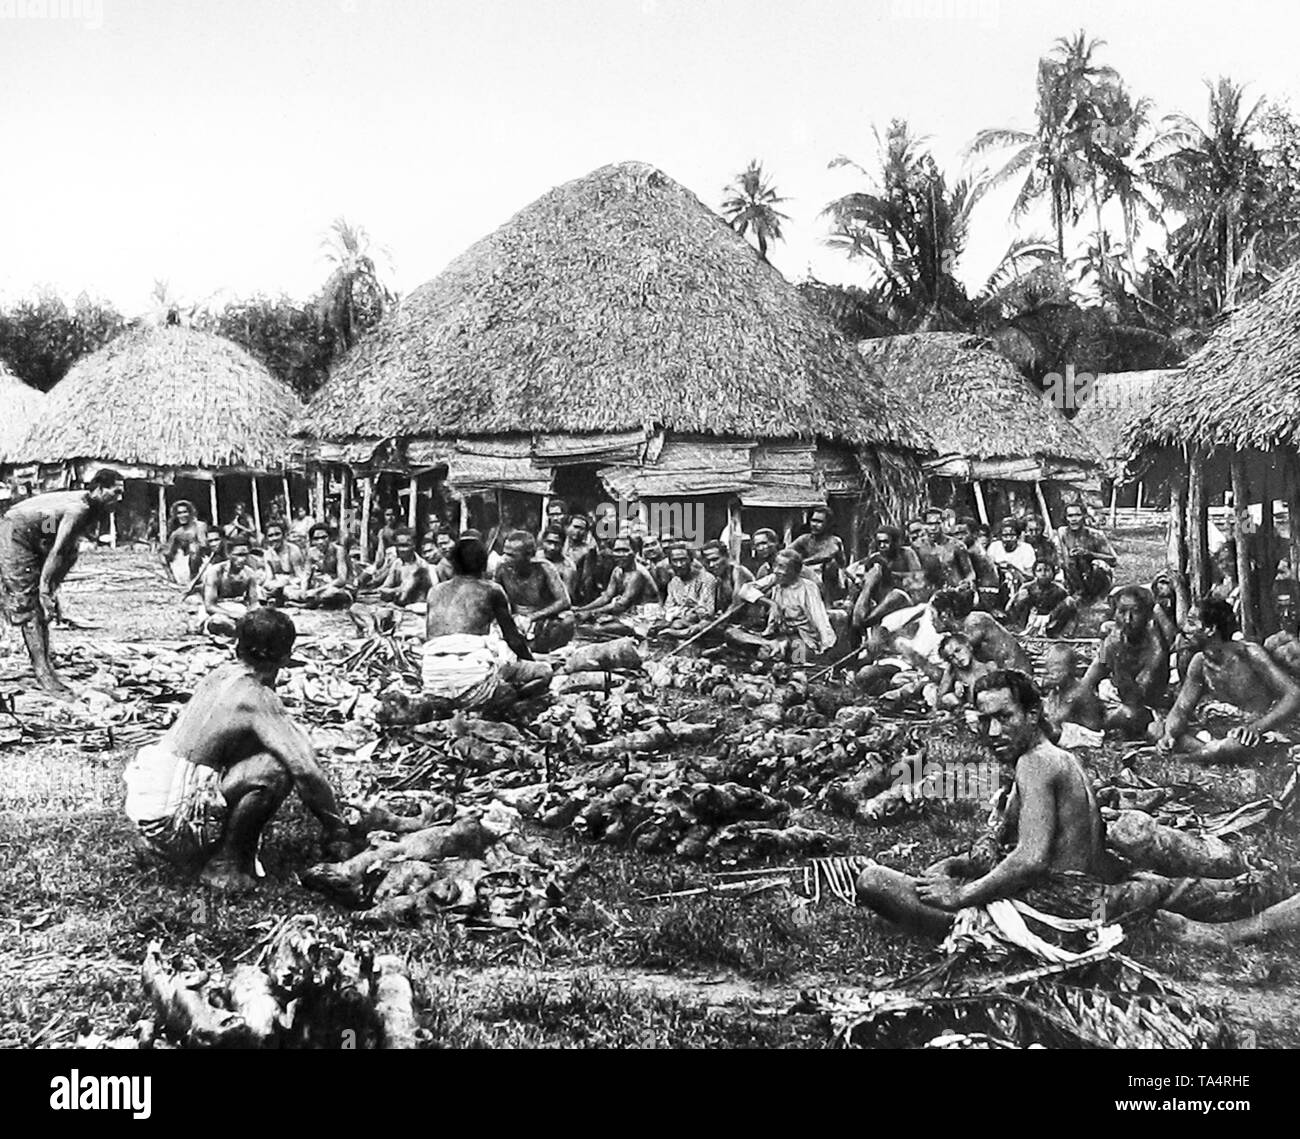 Fiji islands Black and White Stock Photos & Images - Alamy